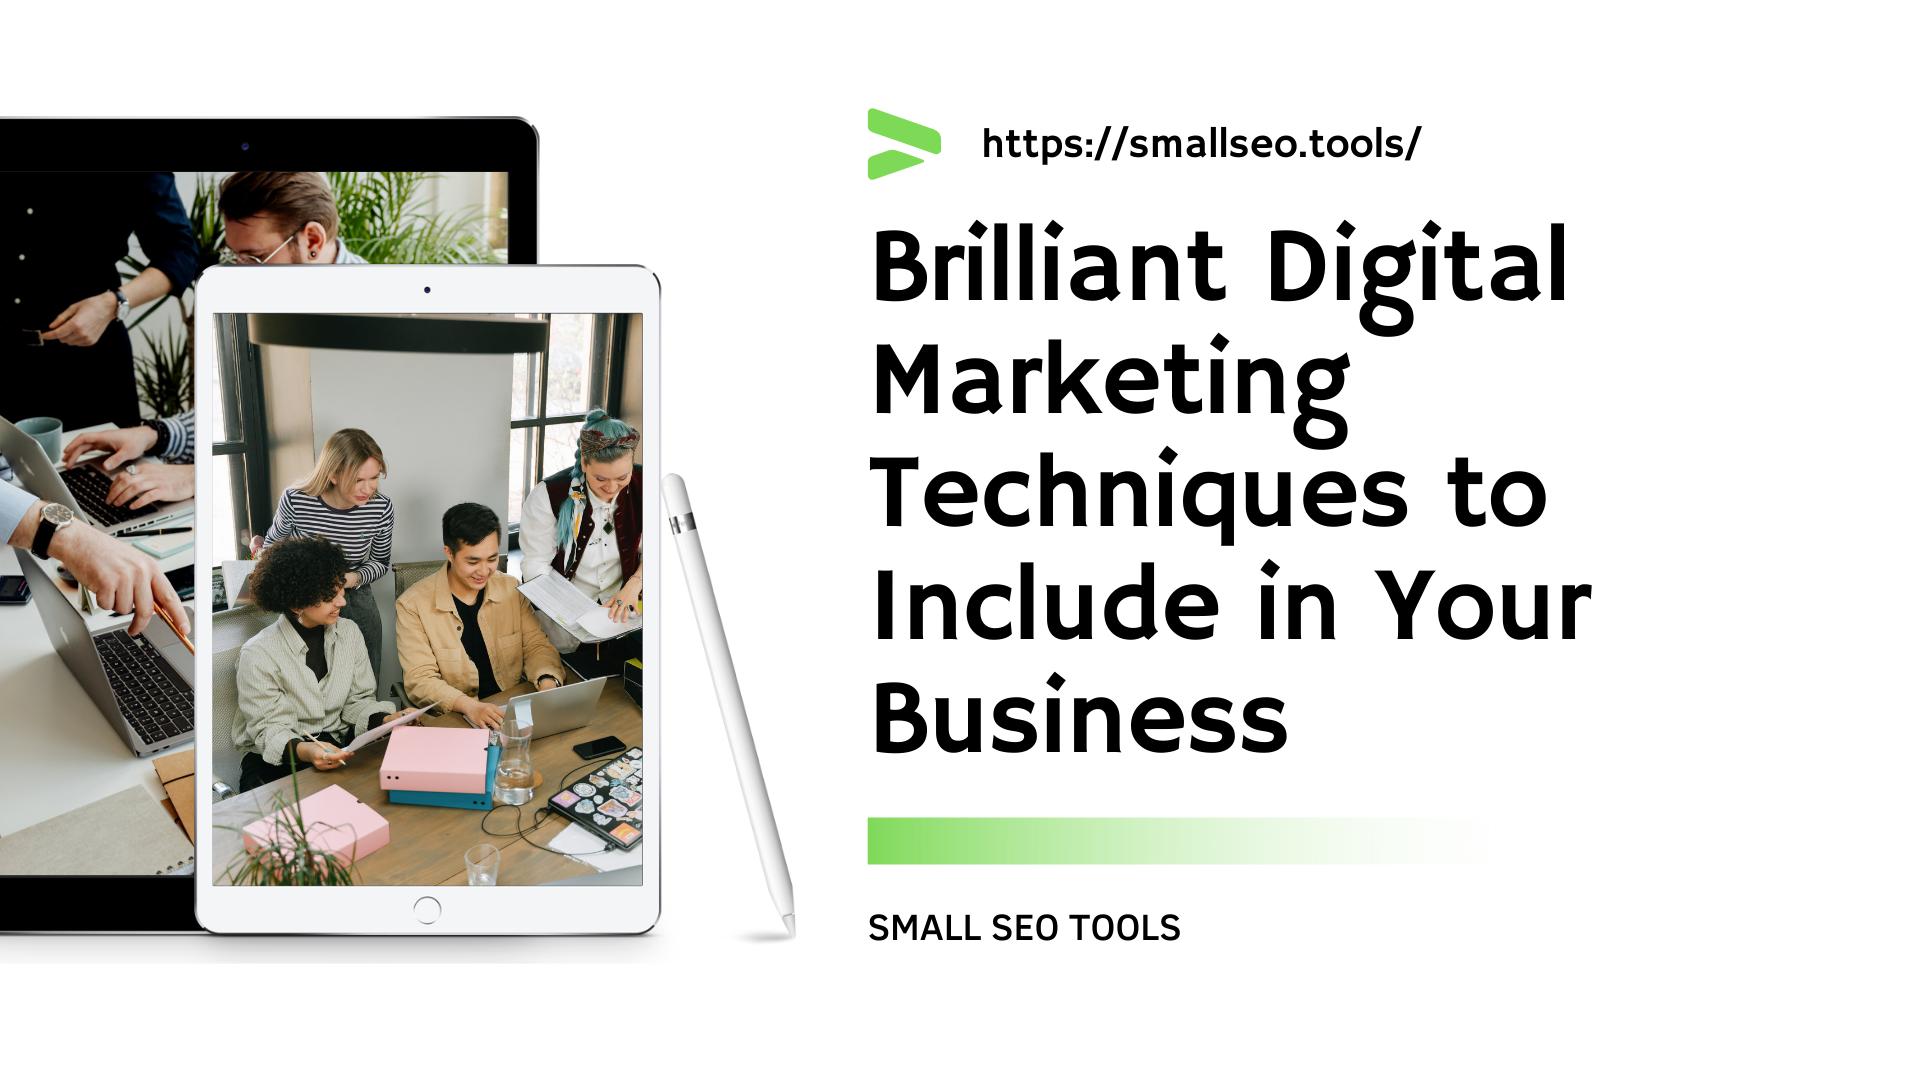 Digital marketing business